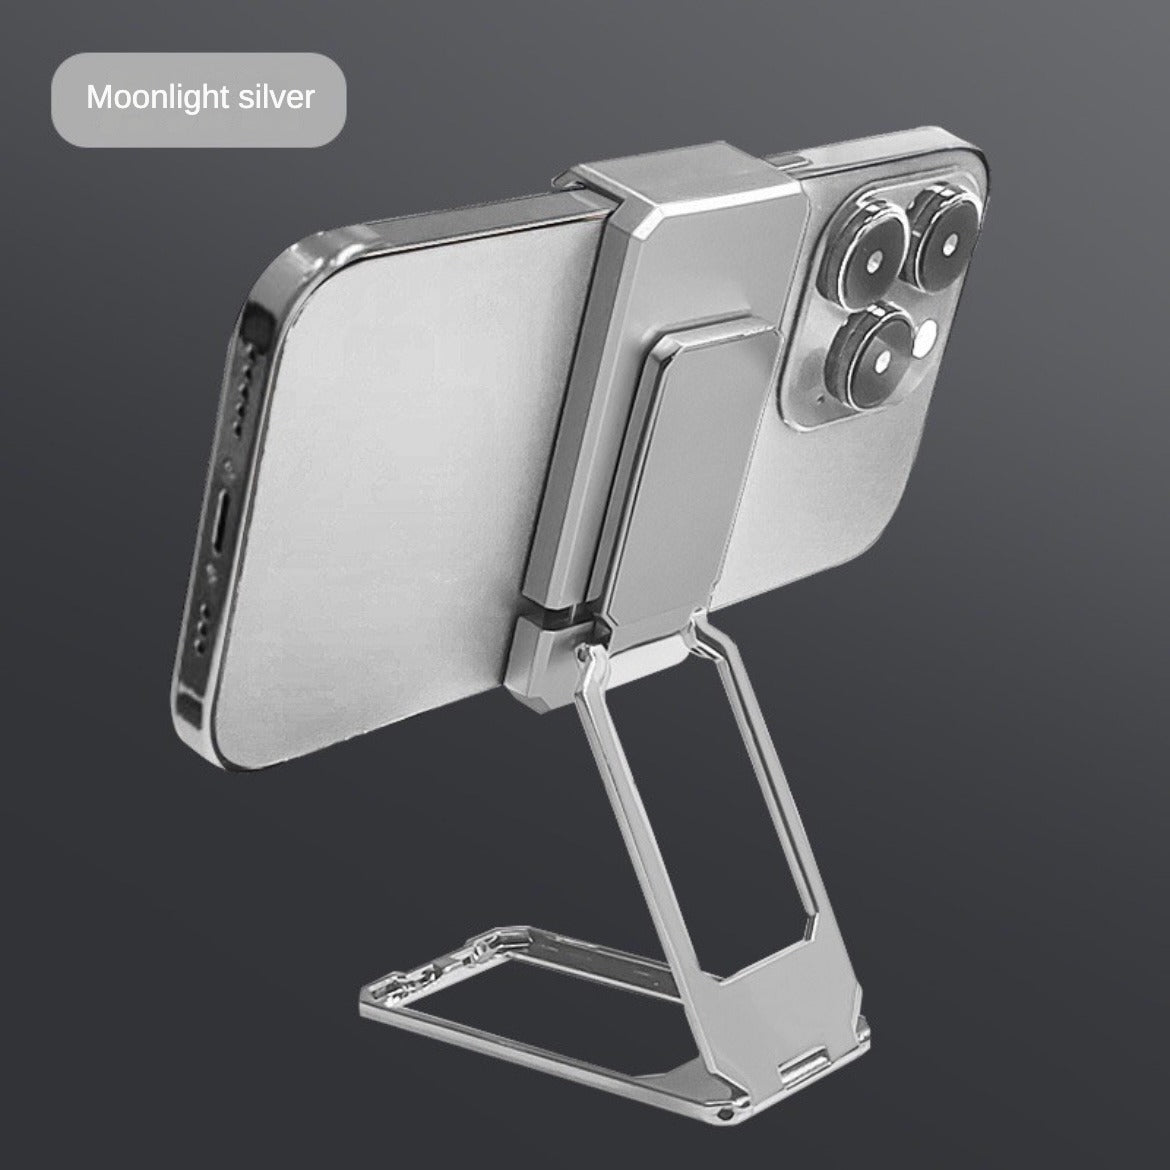 New Foldable Portable Desktop Phone Stand